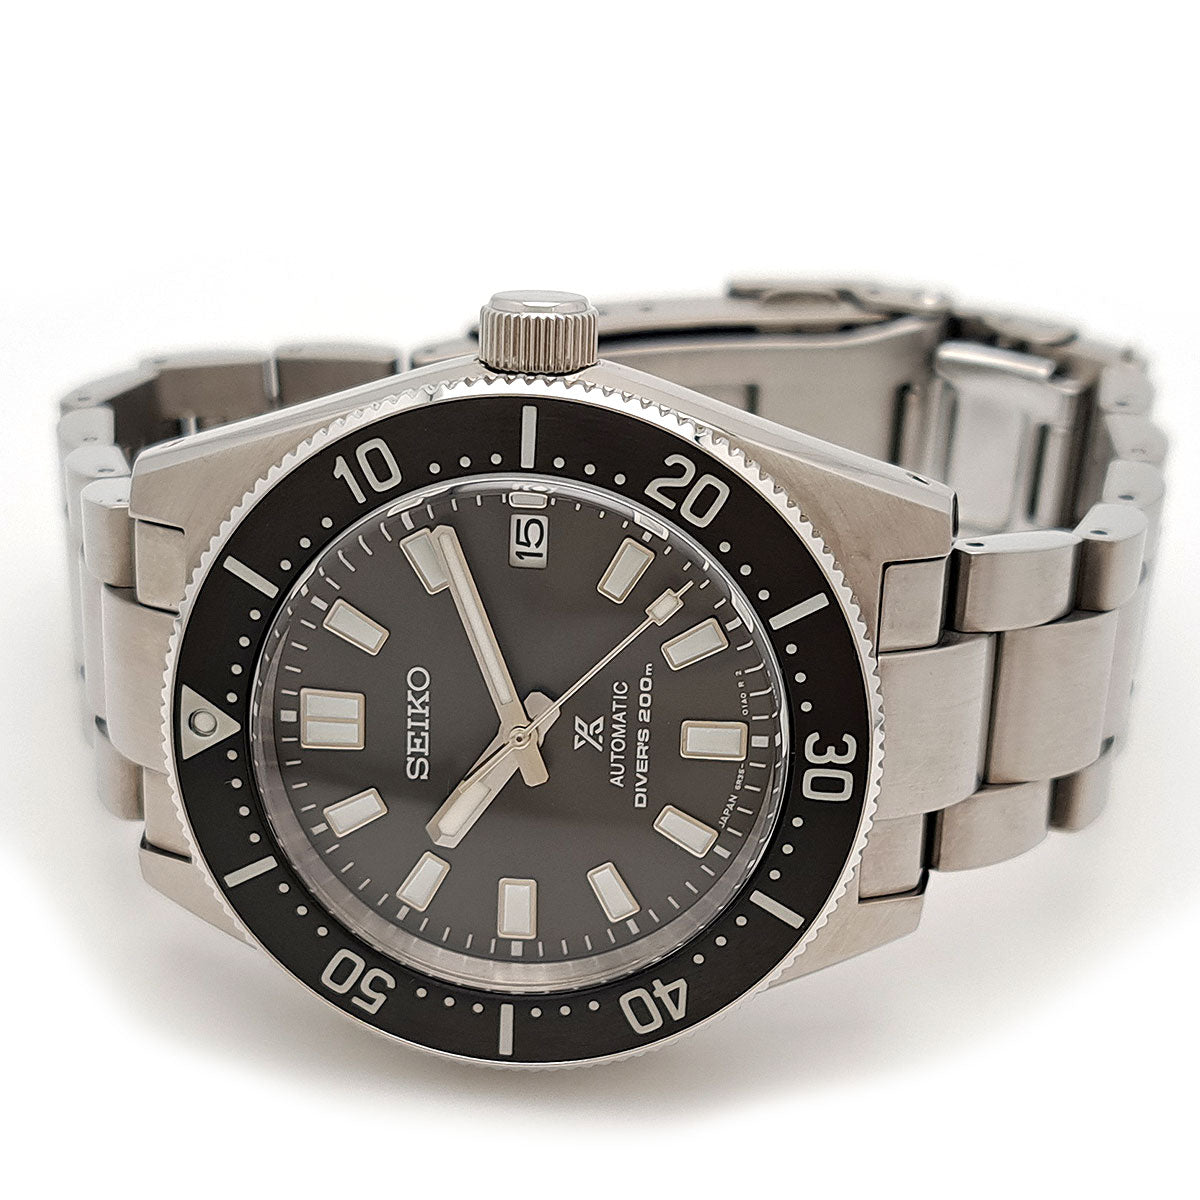 Seiko "Prospex SBDC101" Men's Automatic Wristwatch in Stainless Steel SBDC101